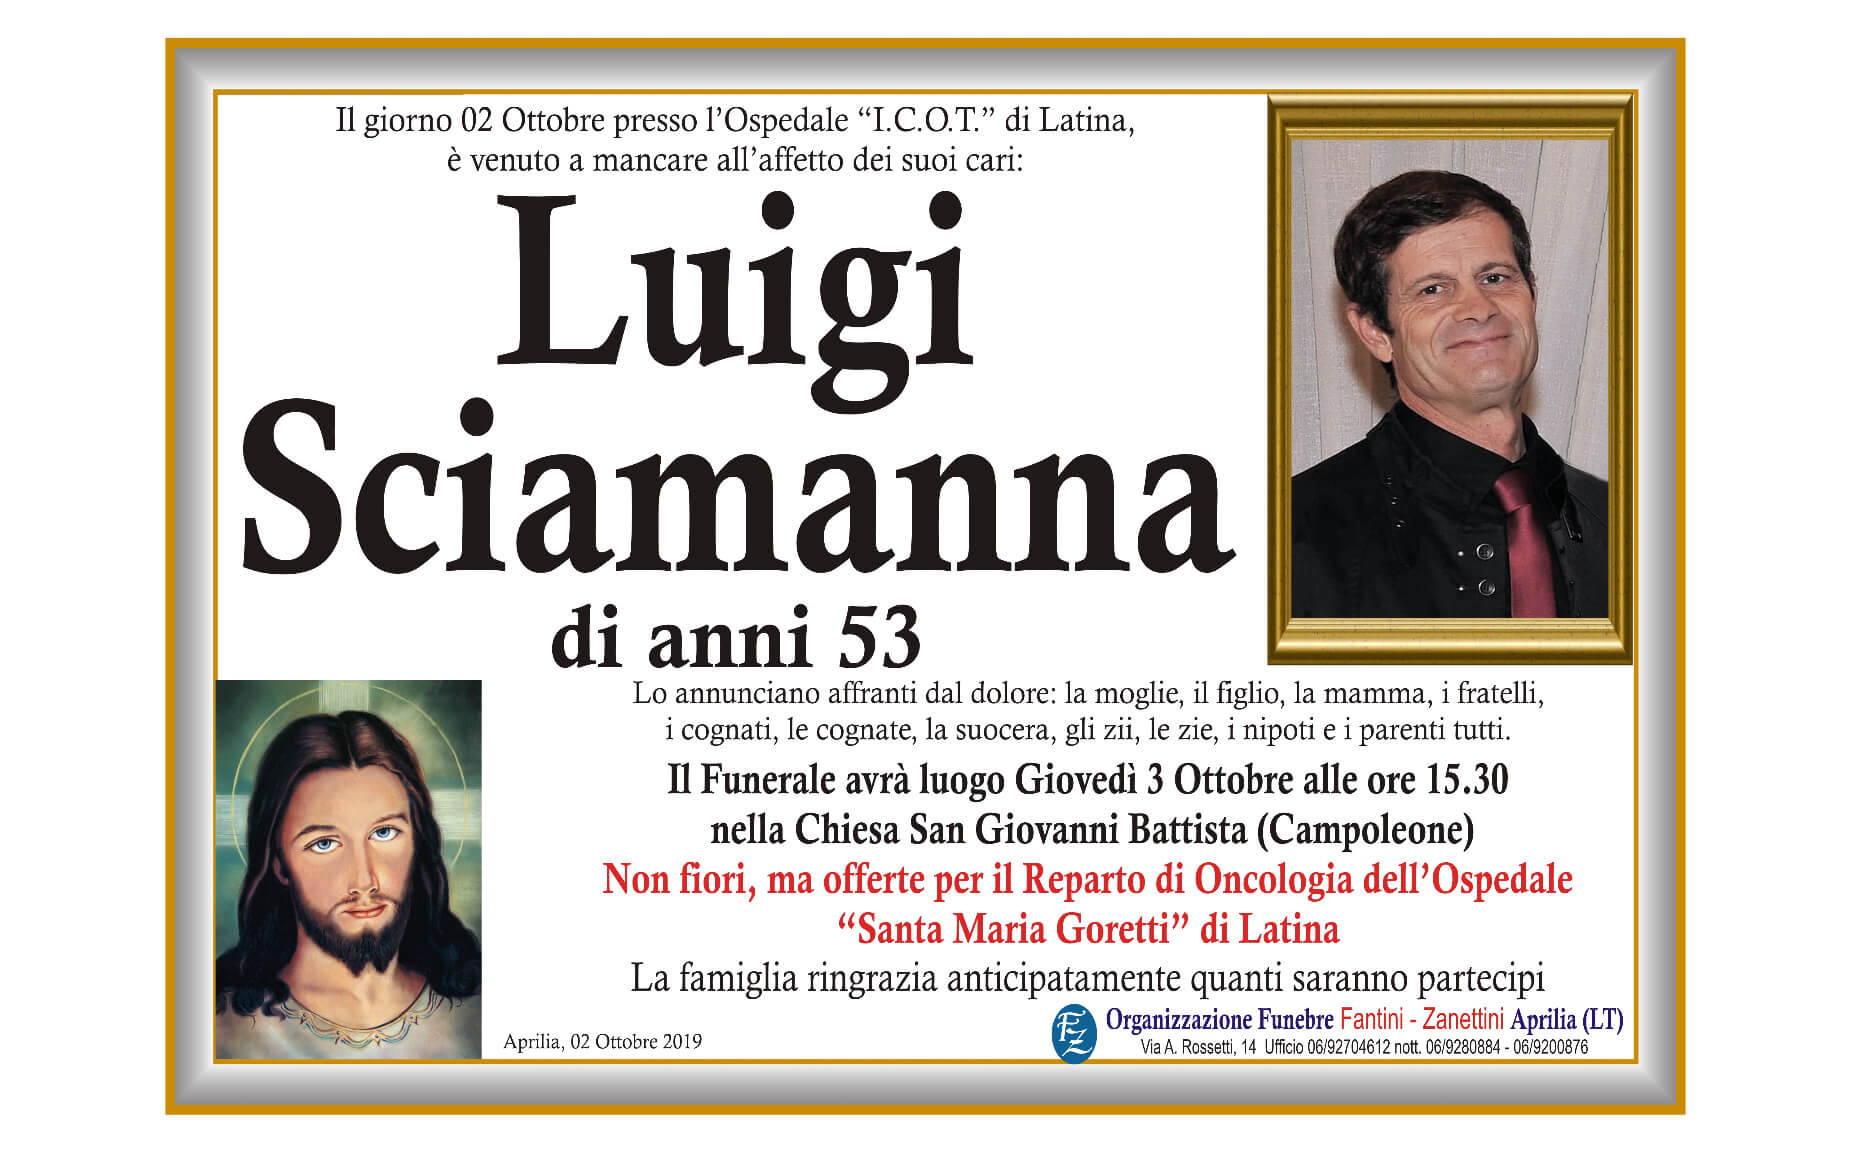 Luigi Scjamanna